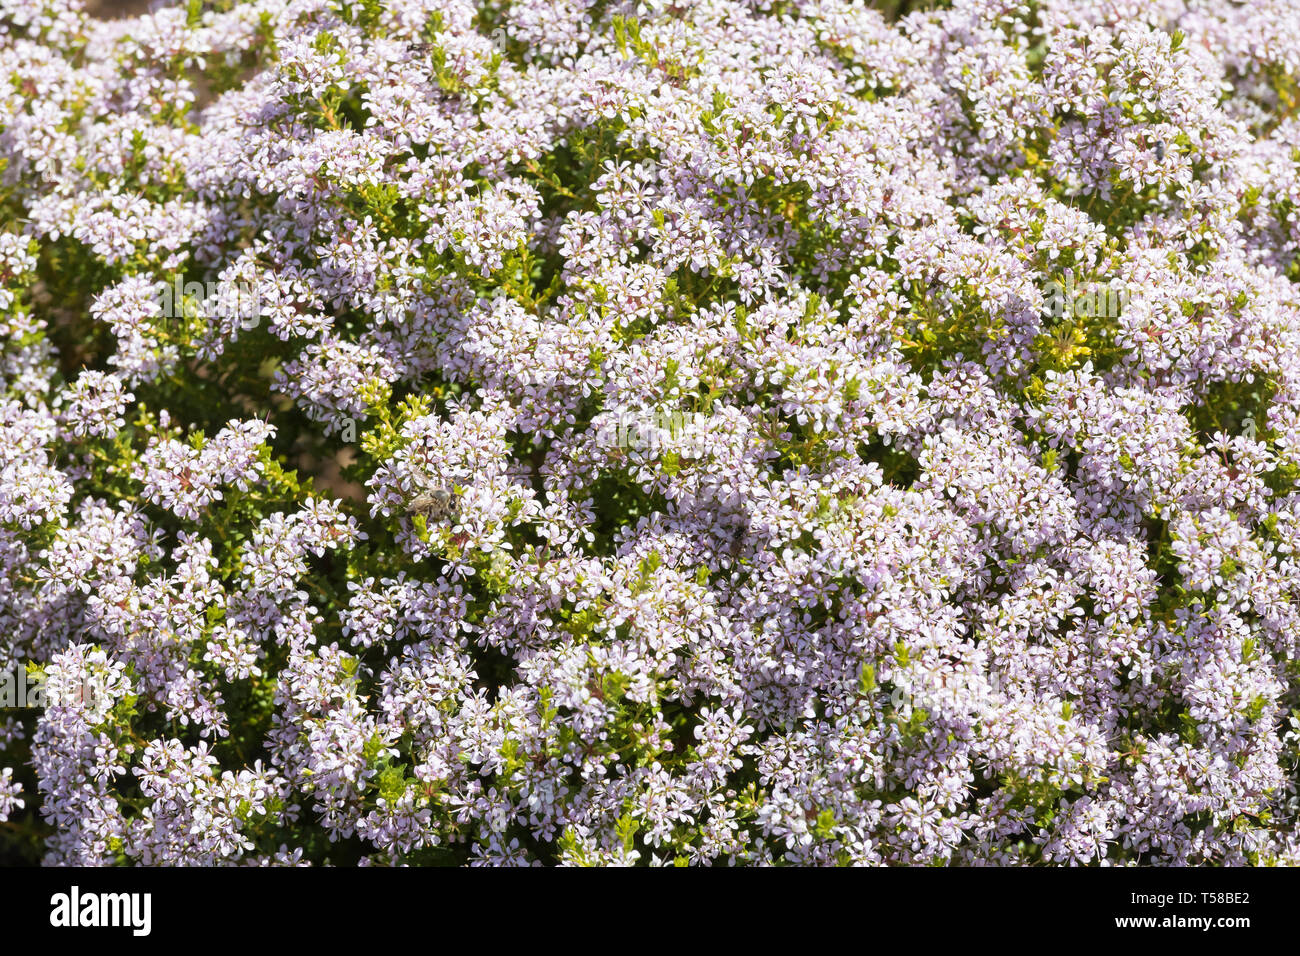 Lila-farbigen Agathosma glabrata, Sandboegoe, Blumen, ein Kap seashore Fynbos Arten, Western Cape, Südafrika Stockfoto